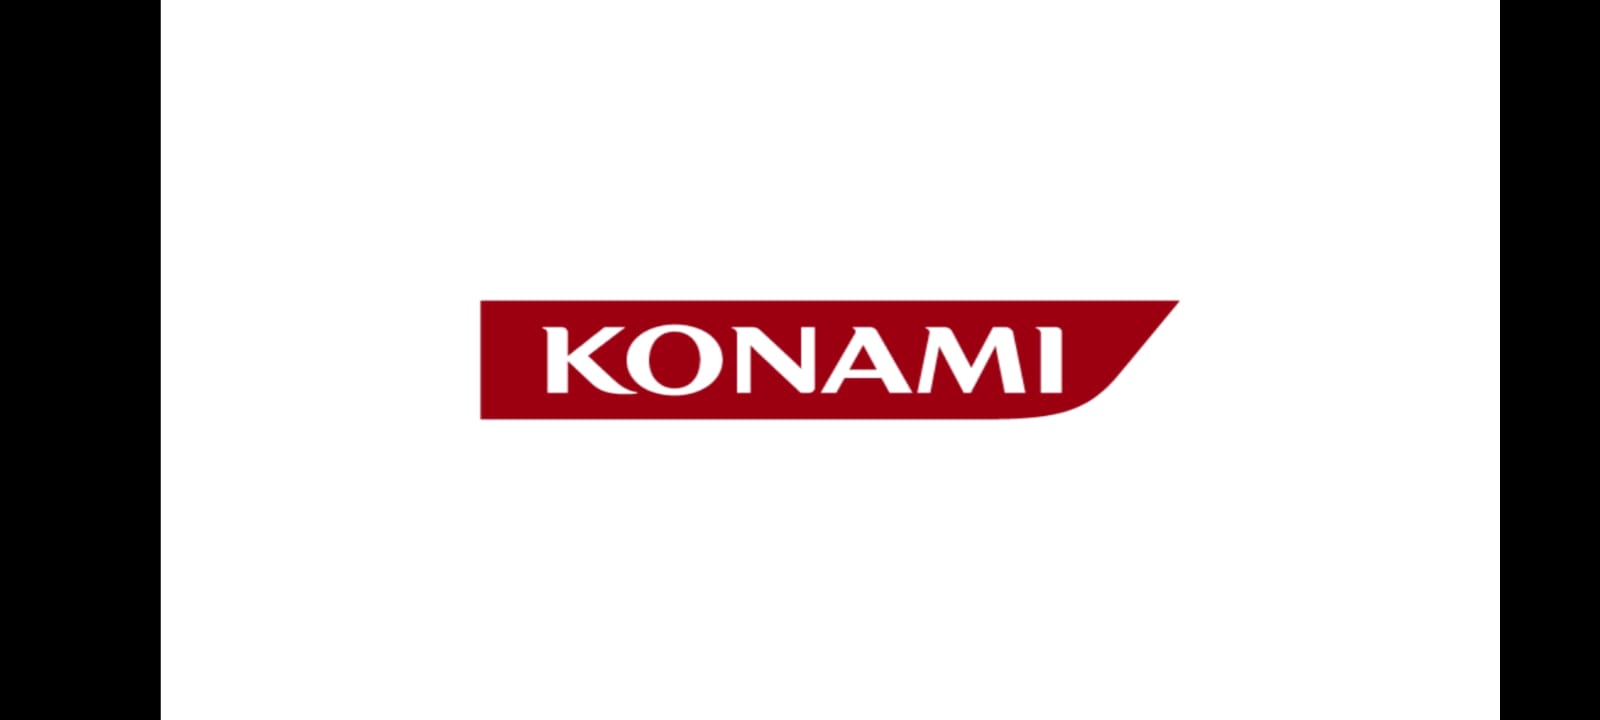 PES 2012 : Konami : Free Download, Borrow, and Streaming